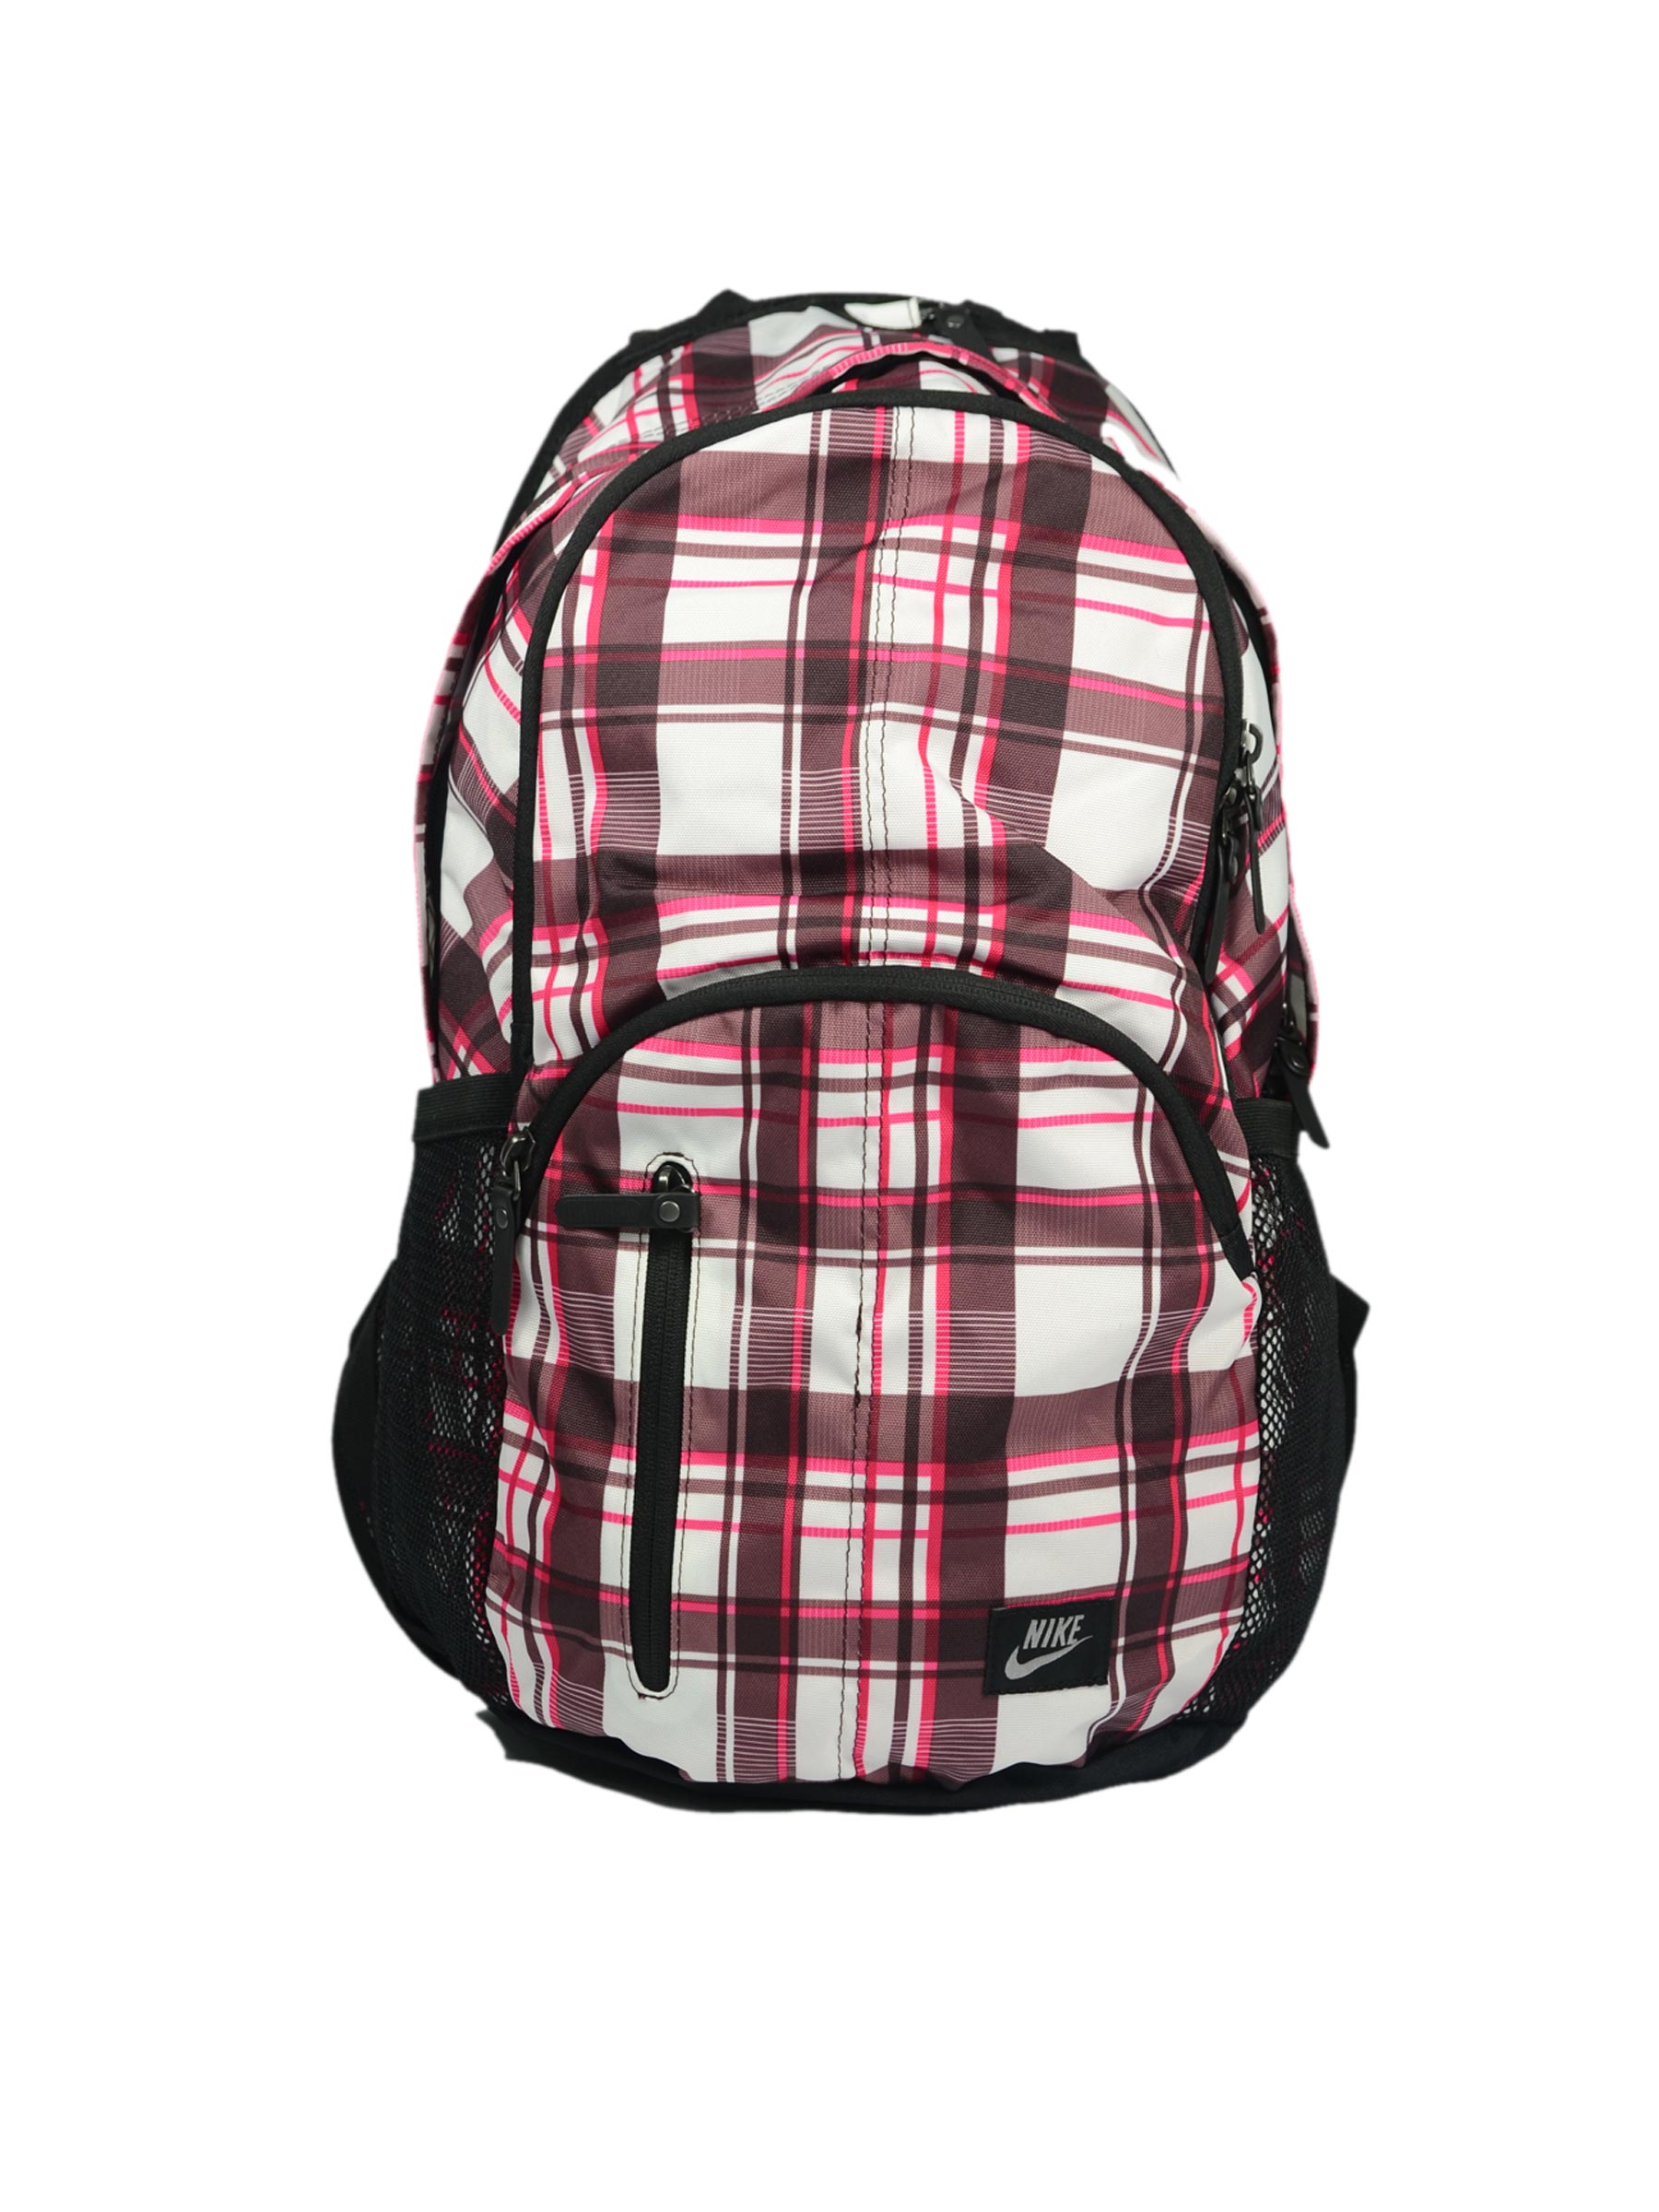 Nike Unisex White Pink Black Check Backpack